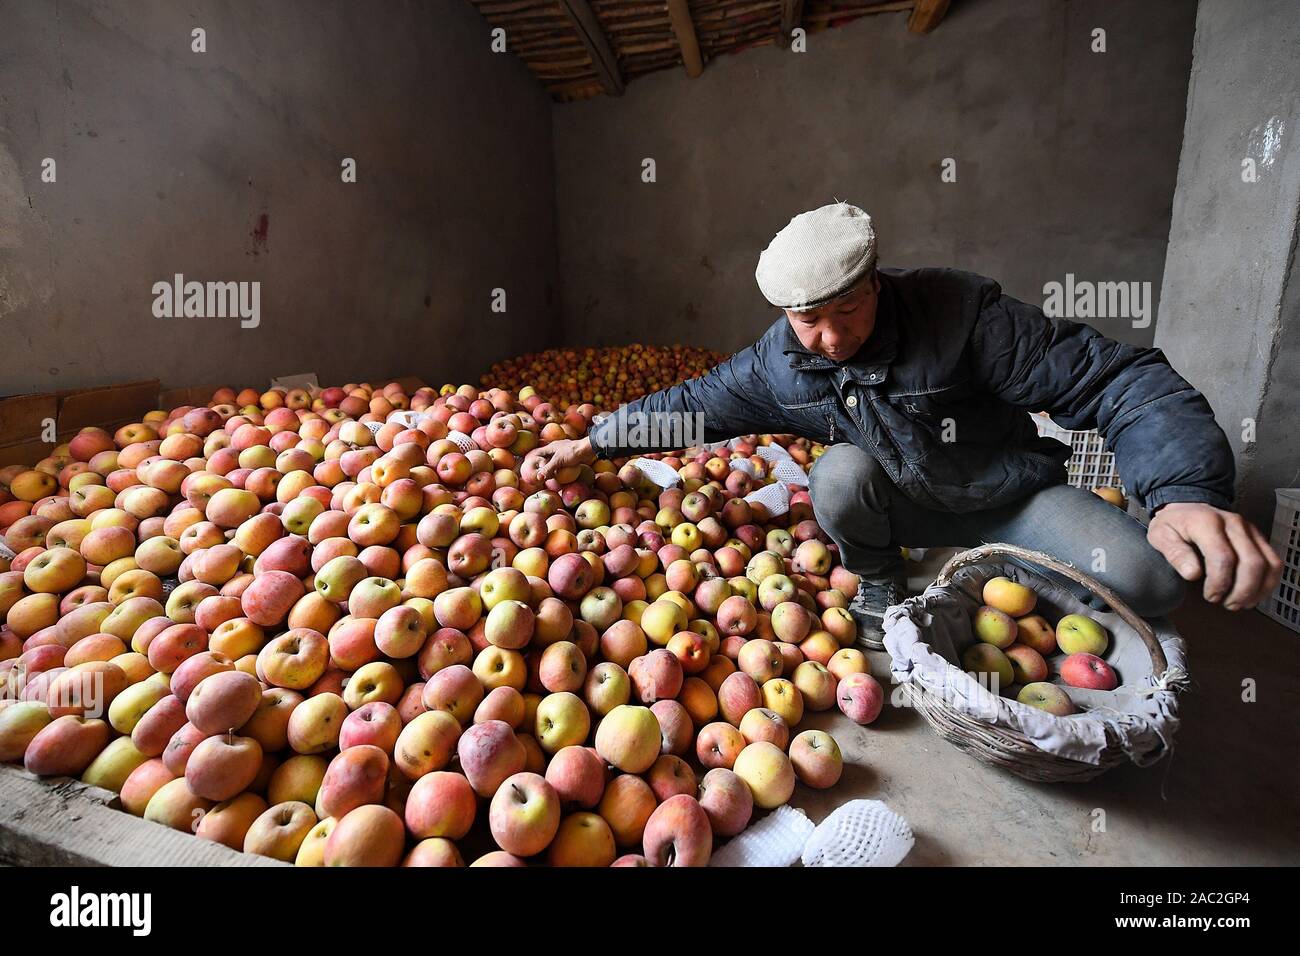 https://c8.alamy.com/comp/2AC2GP4/aksu-chinas-xinjiang-uygur-autonomous-region-28th-nov-2019-a-farmer-selects-apples-at-a-farm-in-aksu-northwest-chinas-xinjiang-uygur-autonomous-region-nov-28-2019-aksu-is-a-major-apple-production-area-in-china-credit-song-yanhuaxinhuaalamy-live-news-2AC2GP4.jpg